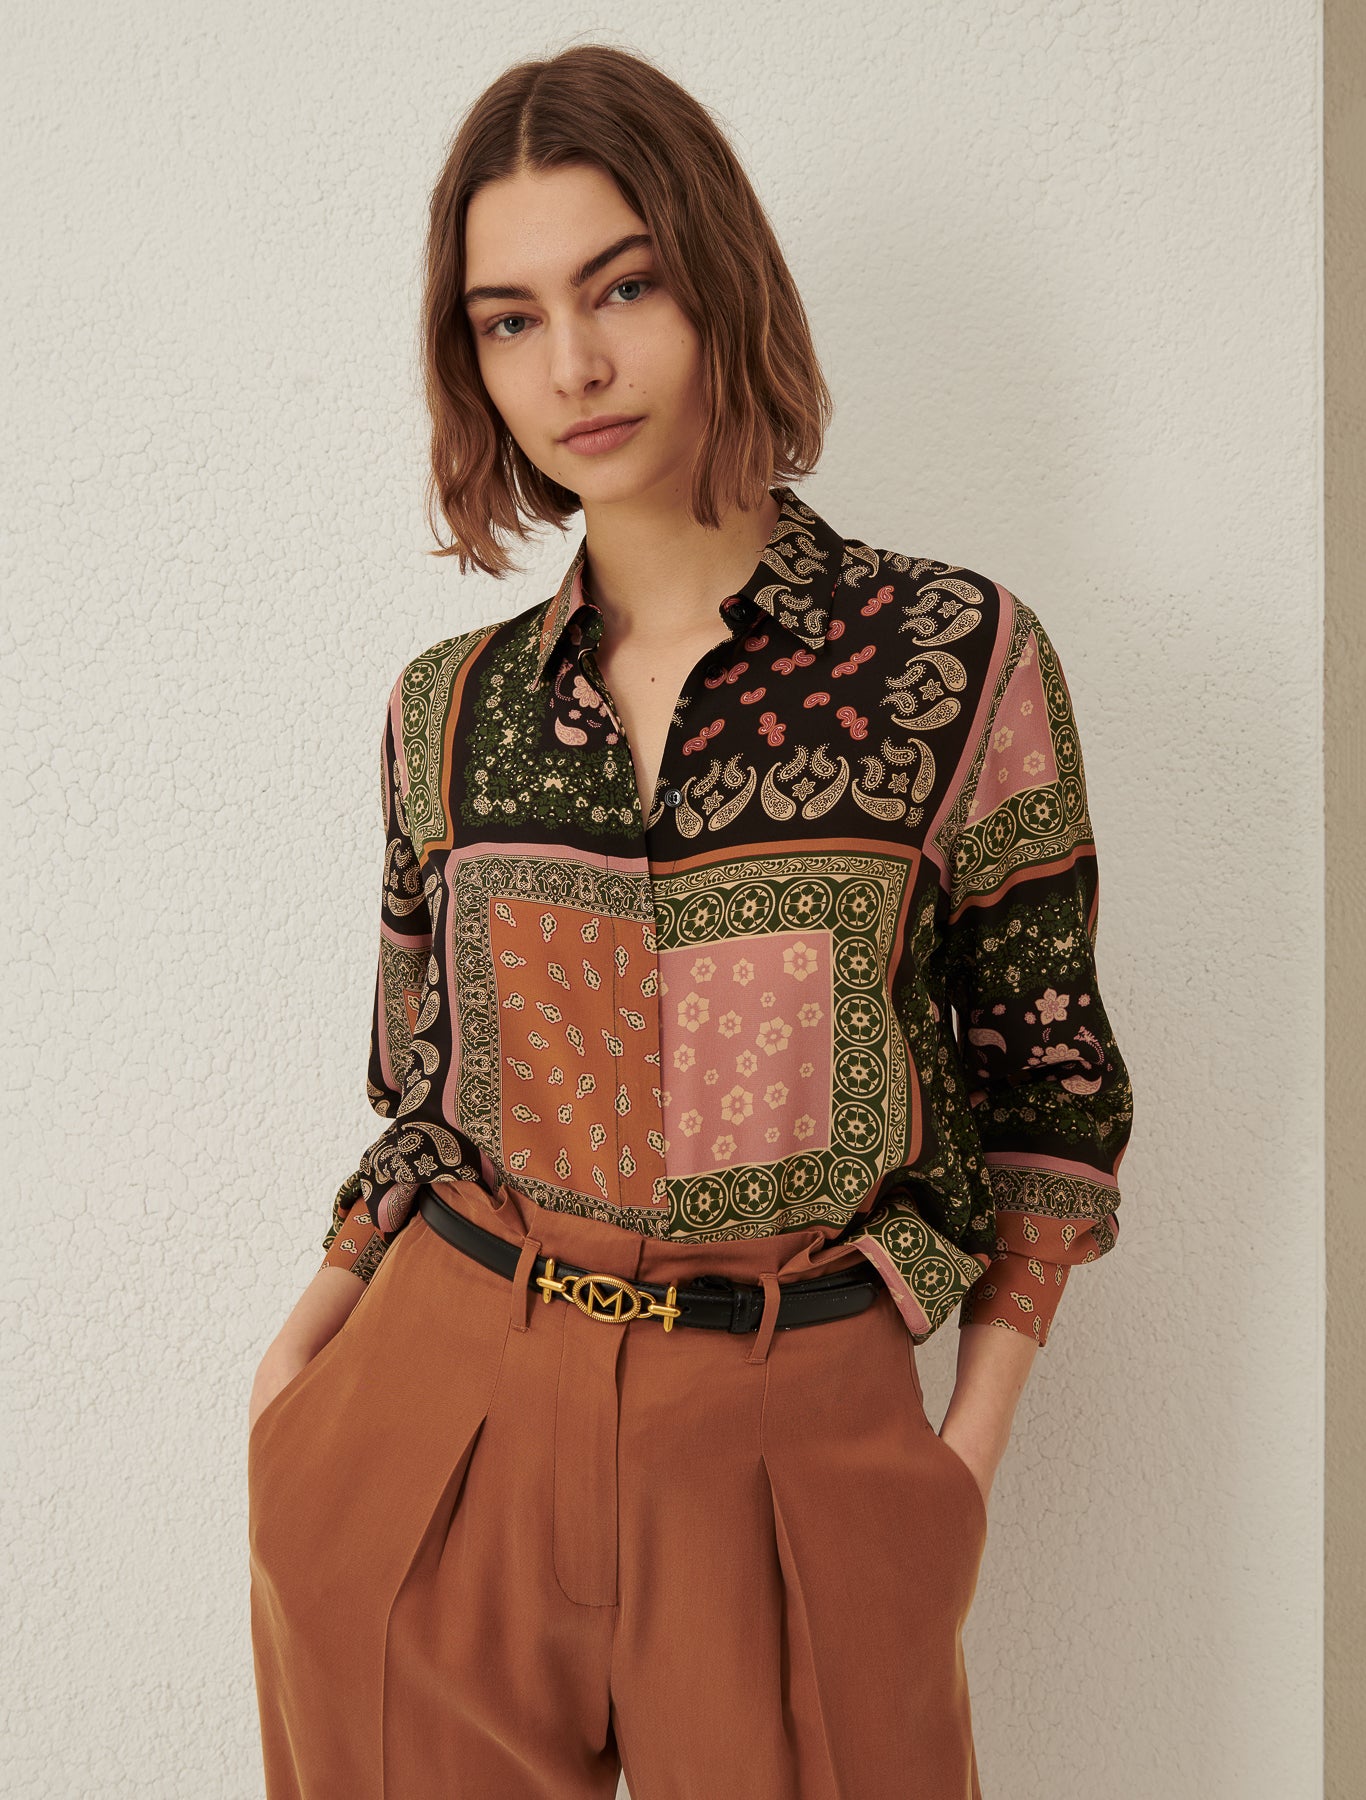 Mila boutique - women’s fashion boutique – Mila Βoutique Markopoulo